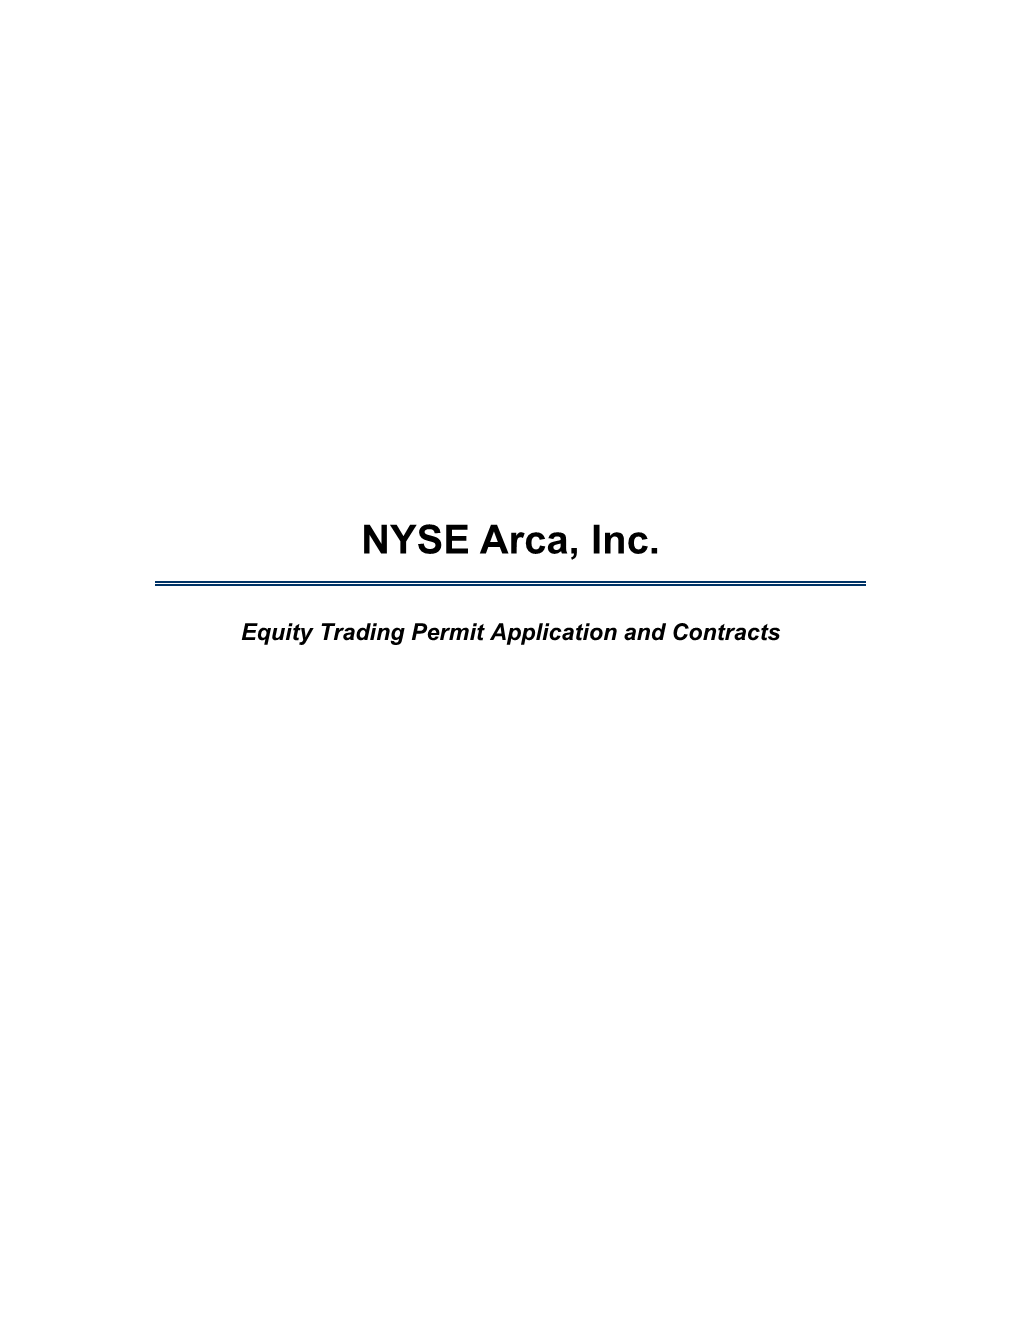 NYSE Arca, Inc